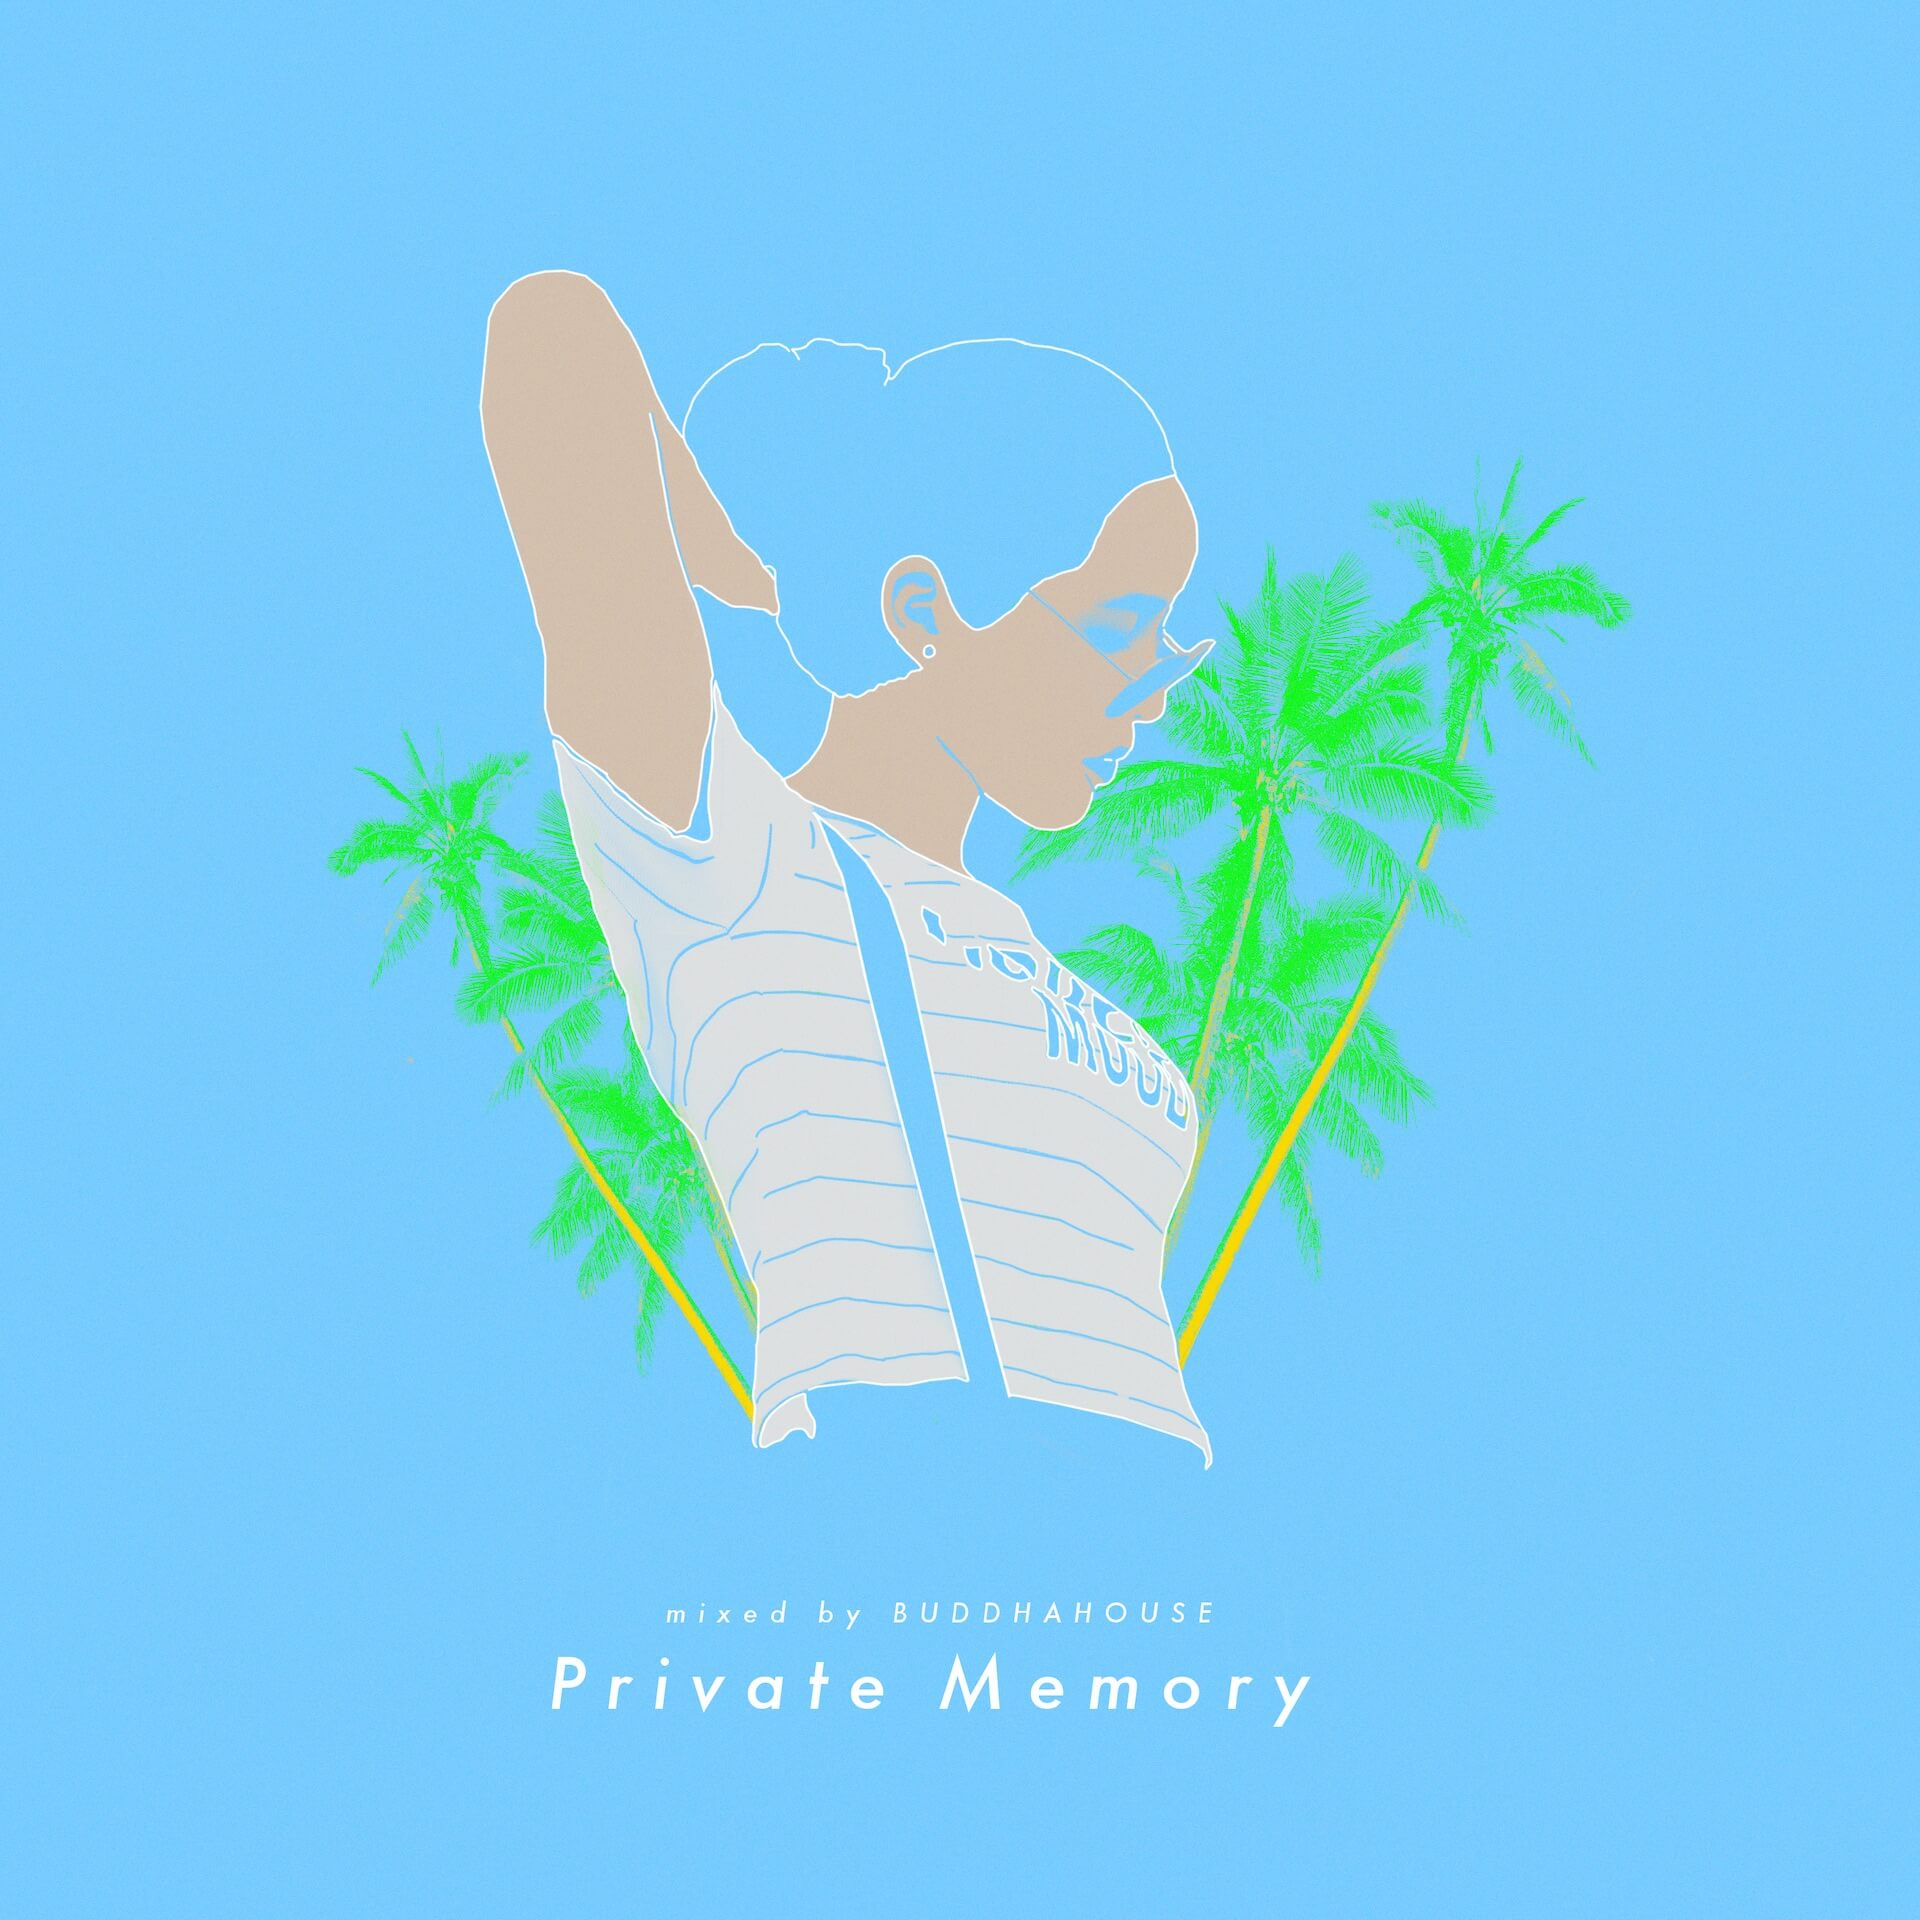 BUDDHAHOUSEによる初のオフィシャルミックス『Private Memory』が配信リリース！さらCD化も決定 music_210706_BUDDHAHOUSE2